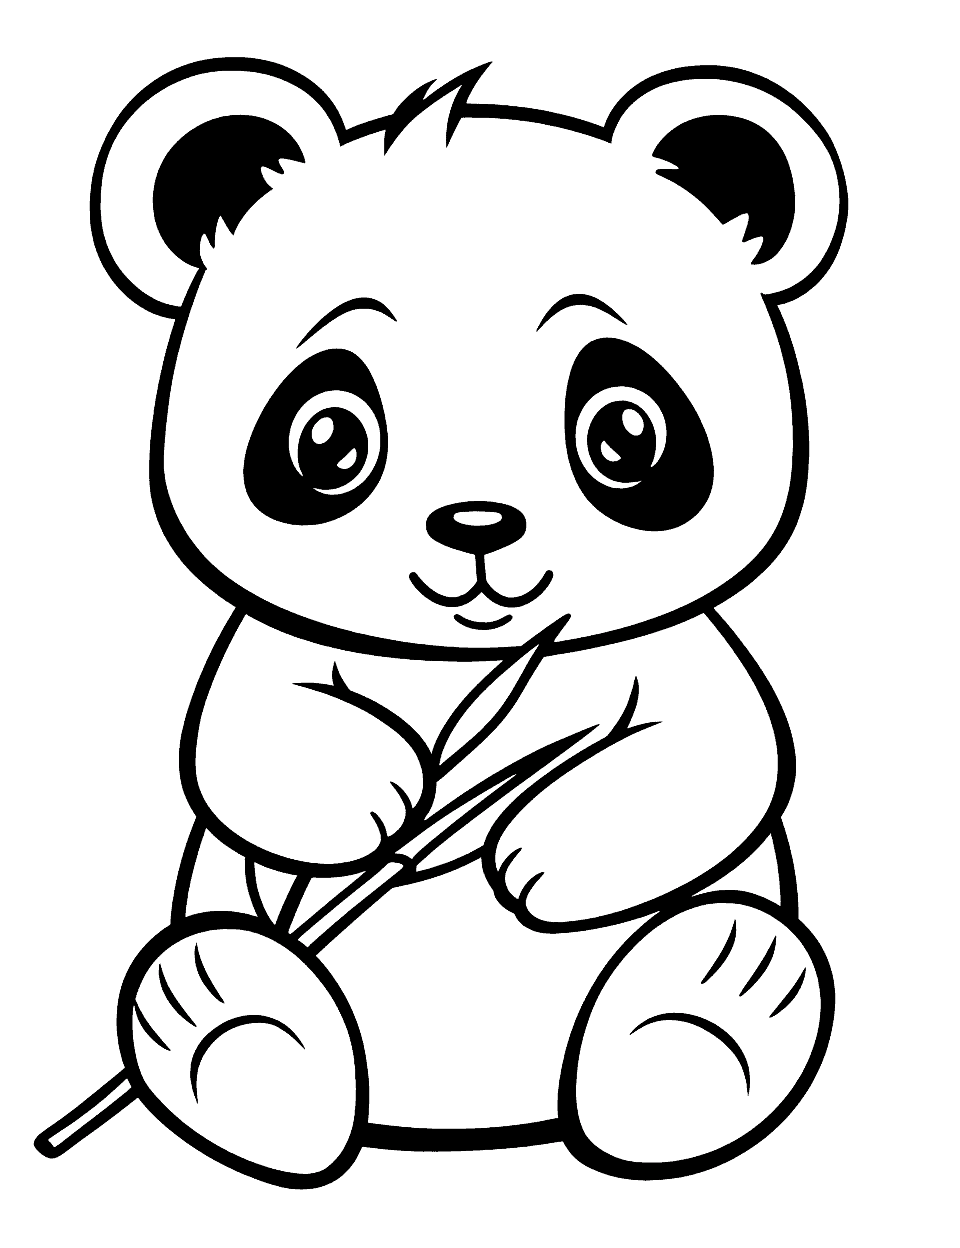 Chibi Panda Eating Bamboo Cute Coloring Page - A small, chubby panda happily munching on bamboo shoots.